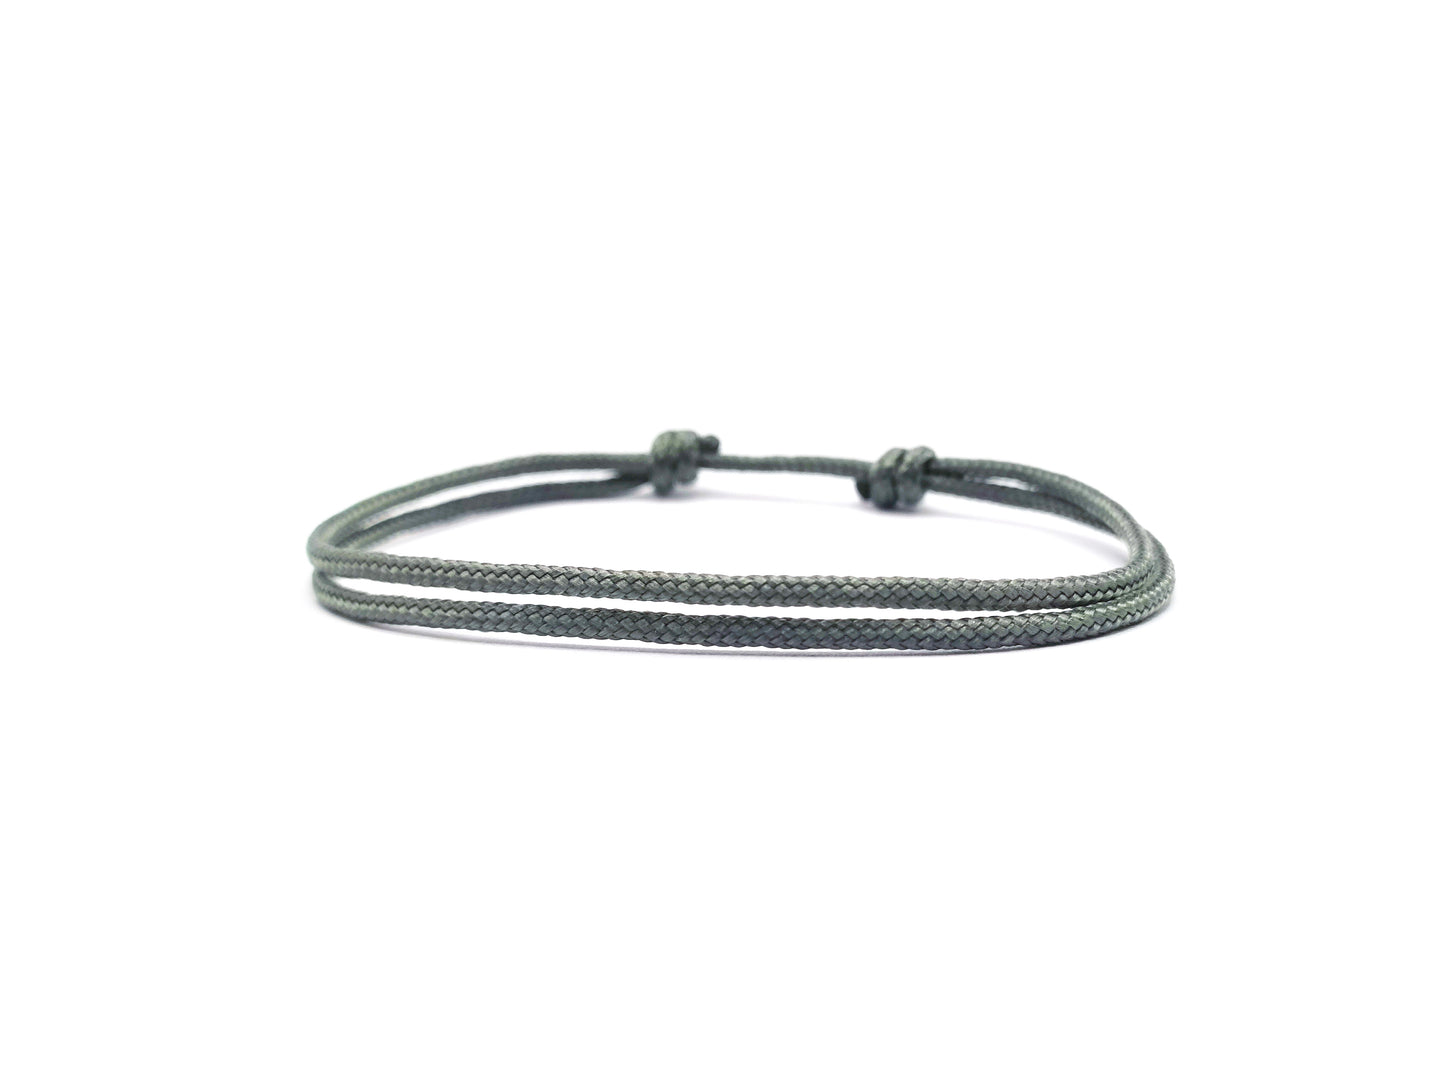 Surfbalance "Dark Green" bracelet sailing rope 2mm